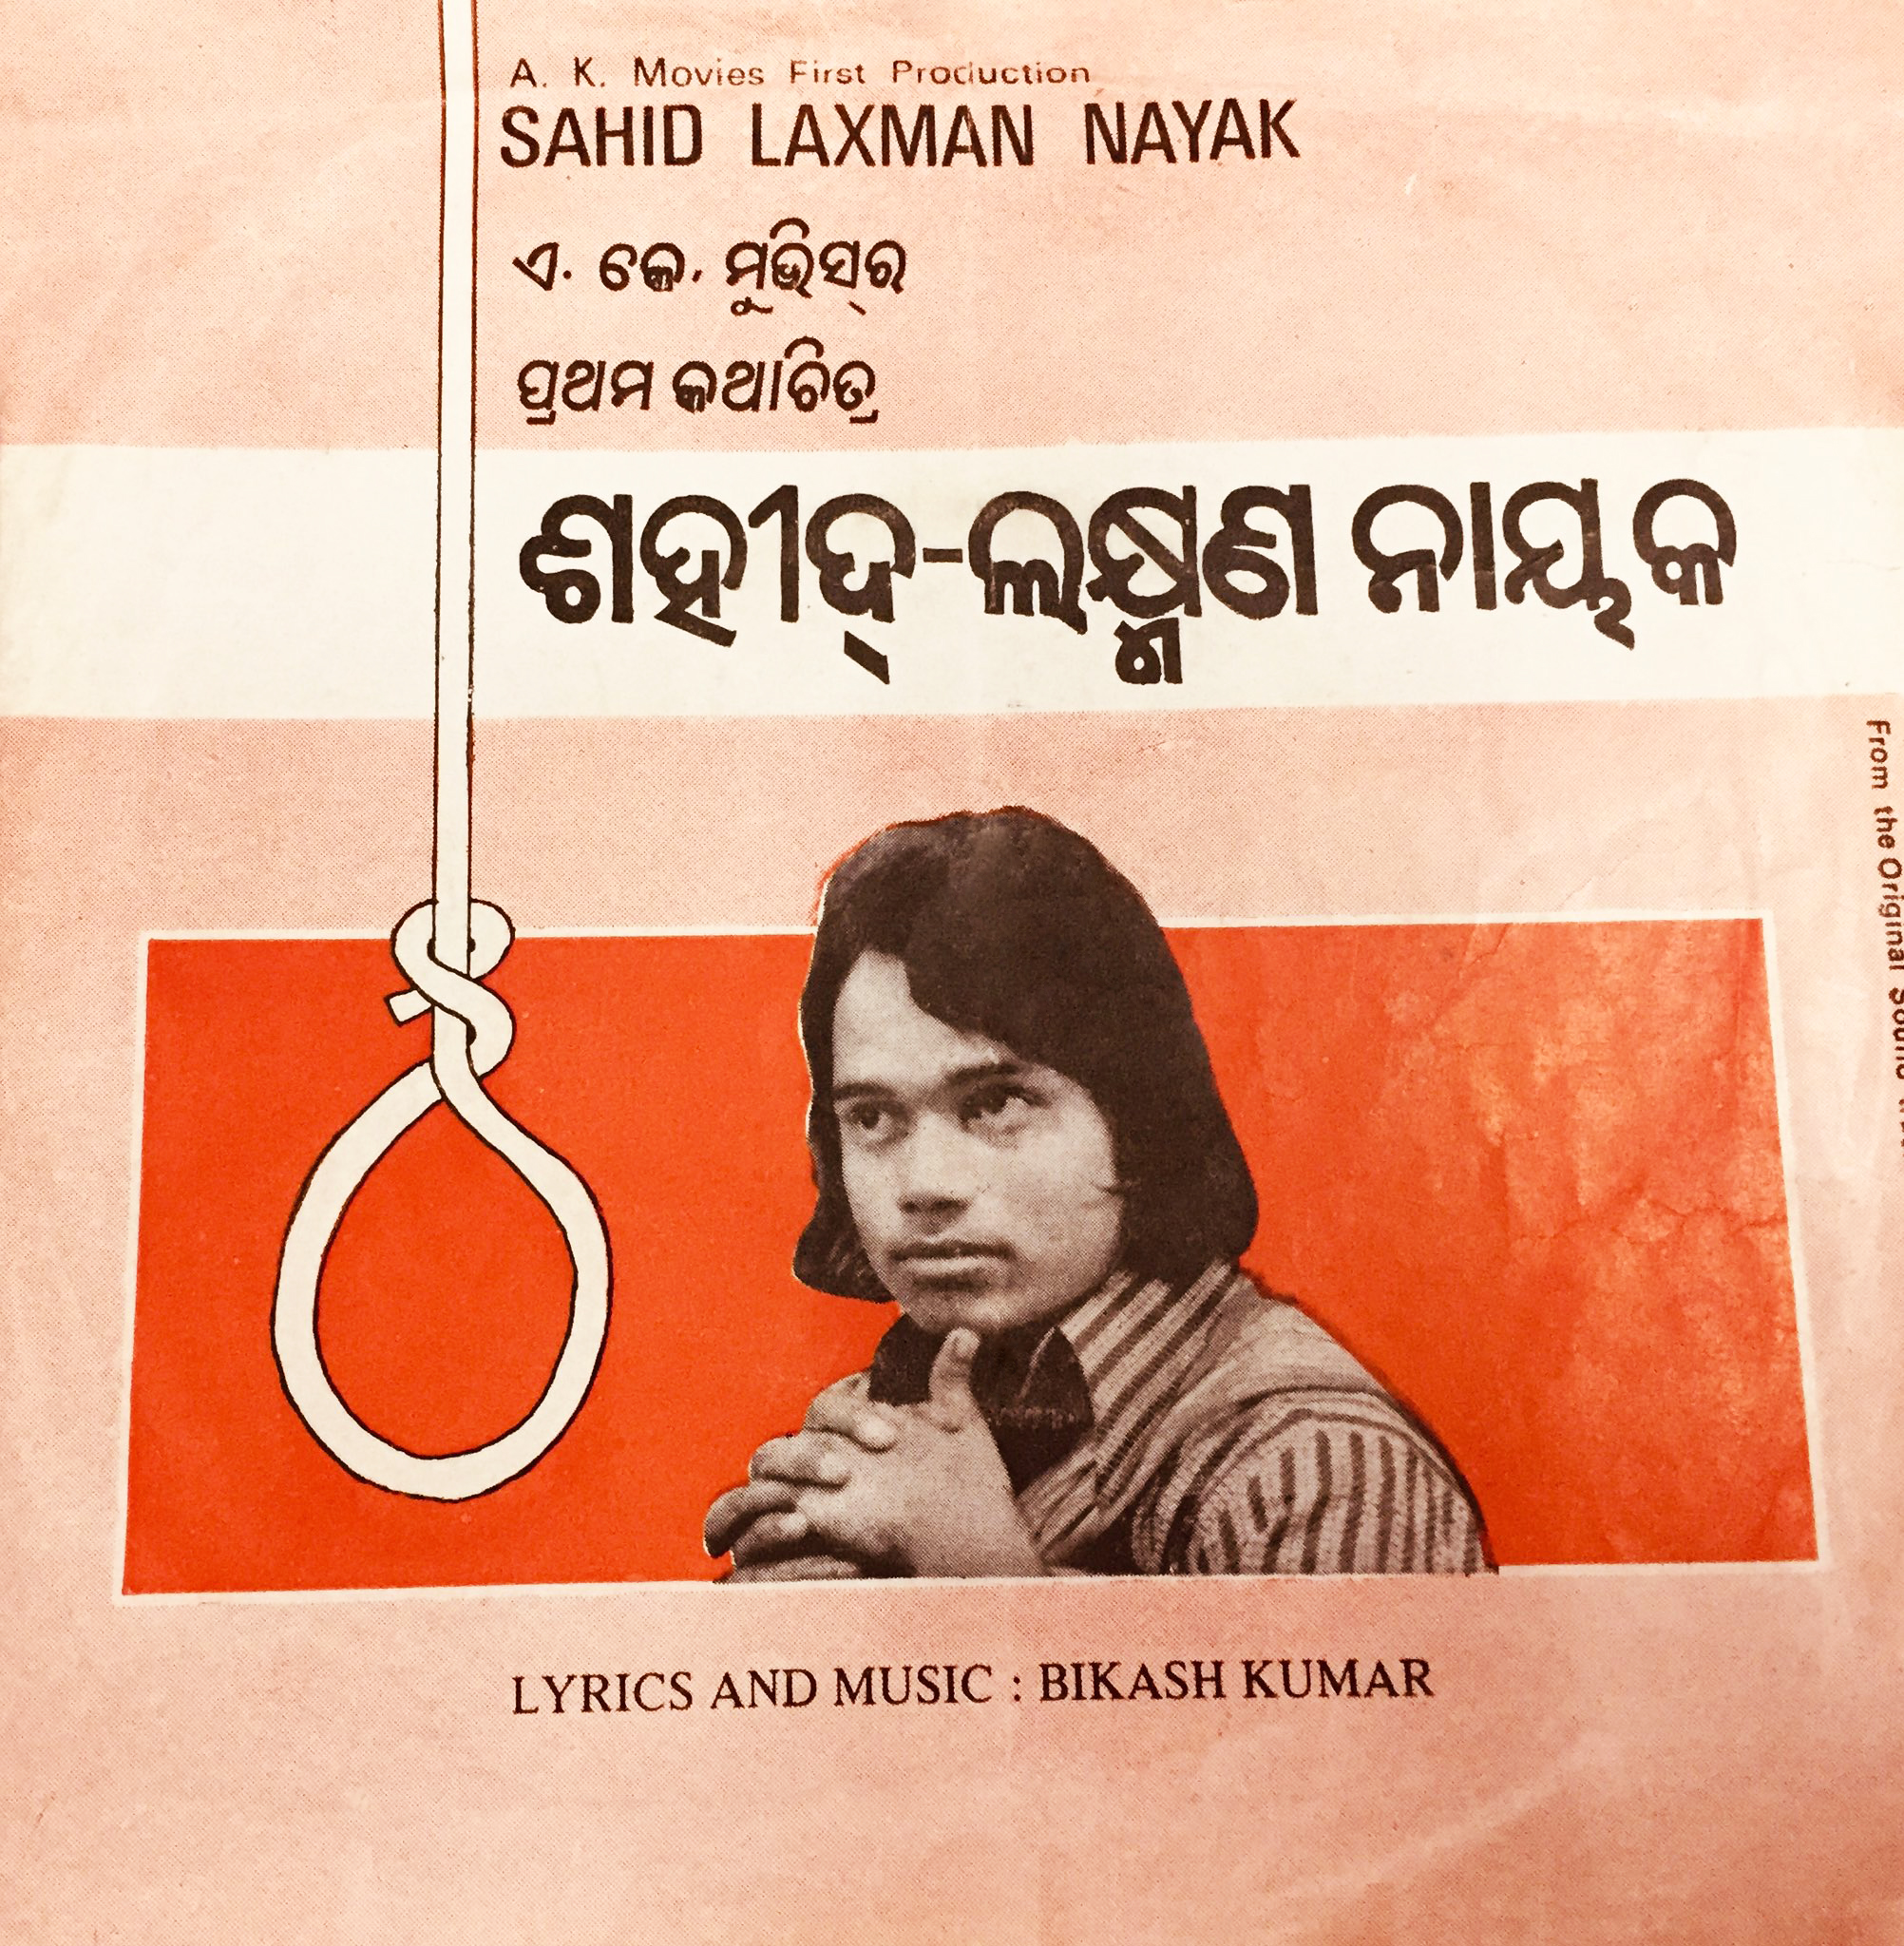 'Sahid Laxman Nayak' audio artwork